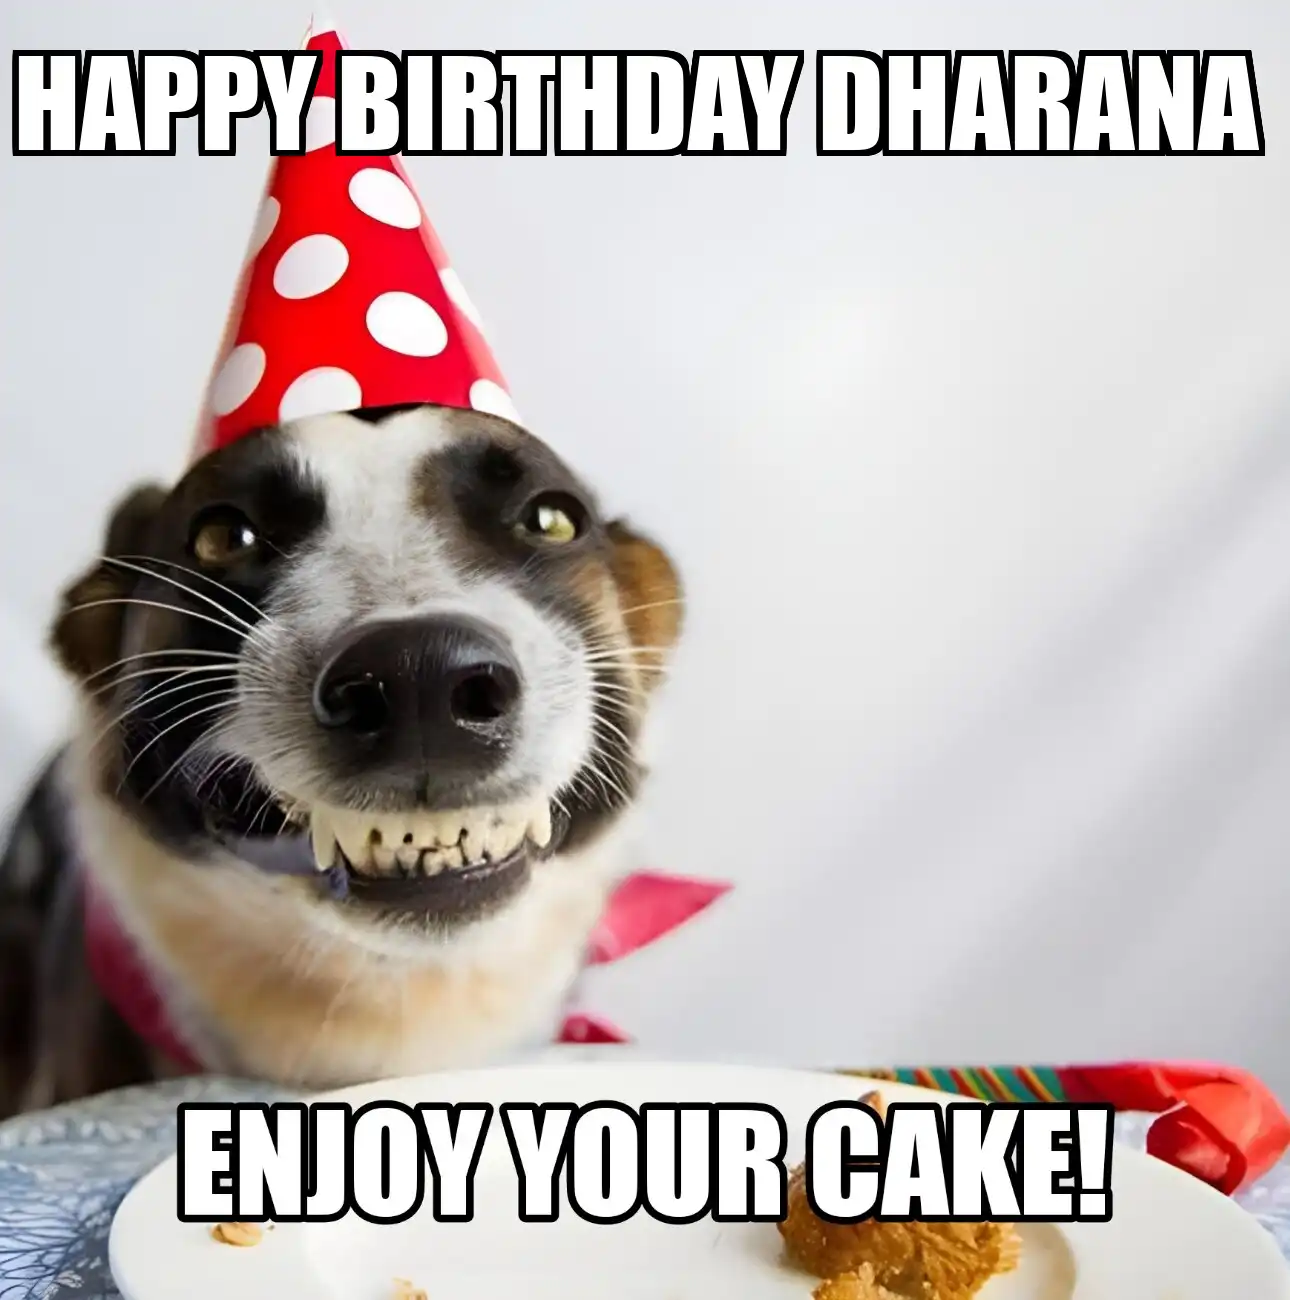 Happy Birthday Dharana Enjoy Your Cake Dog Meme